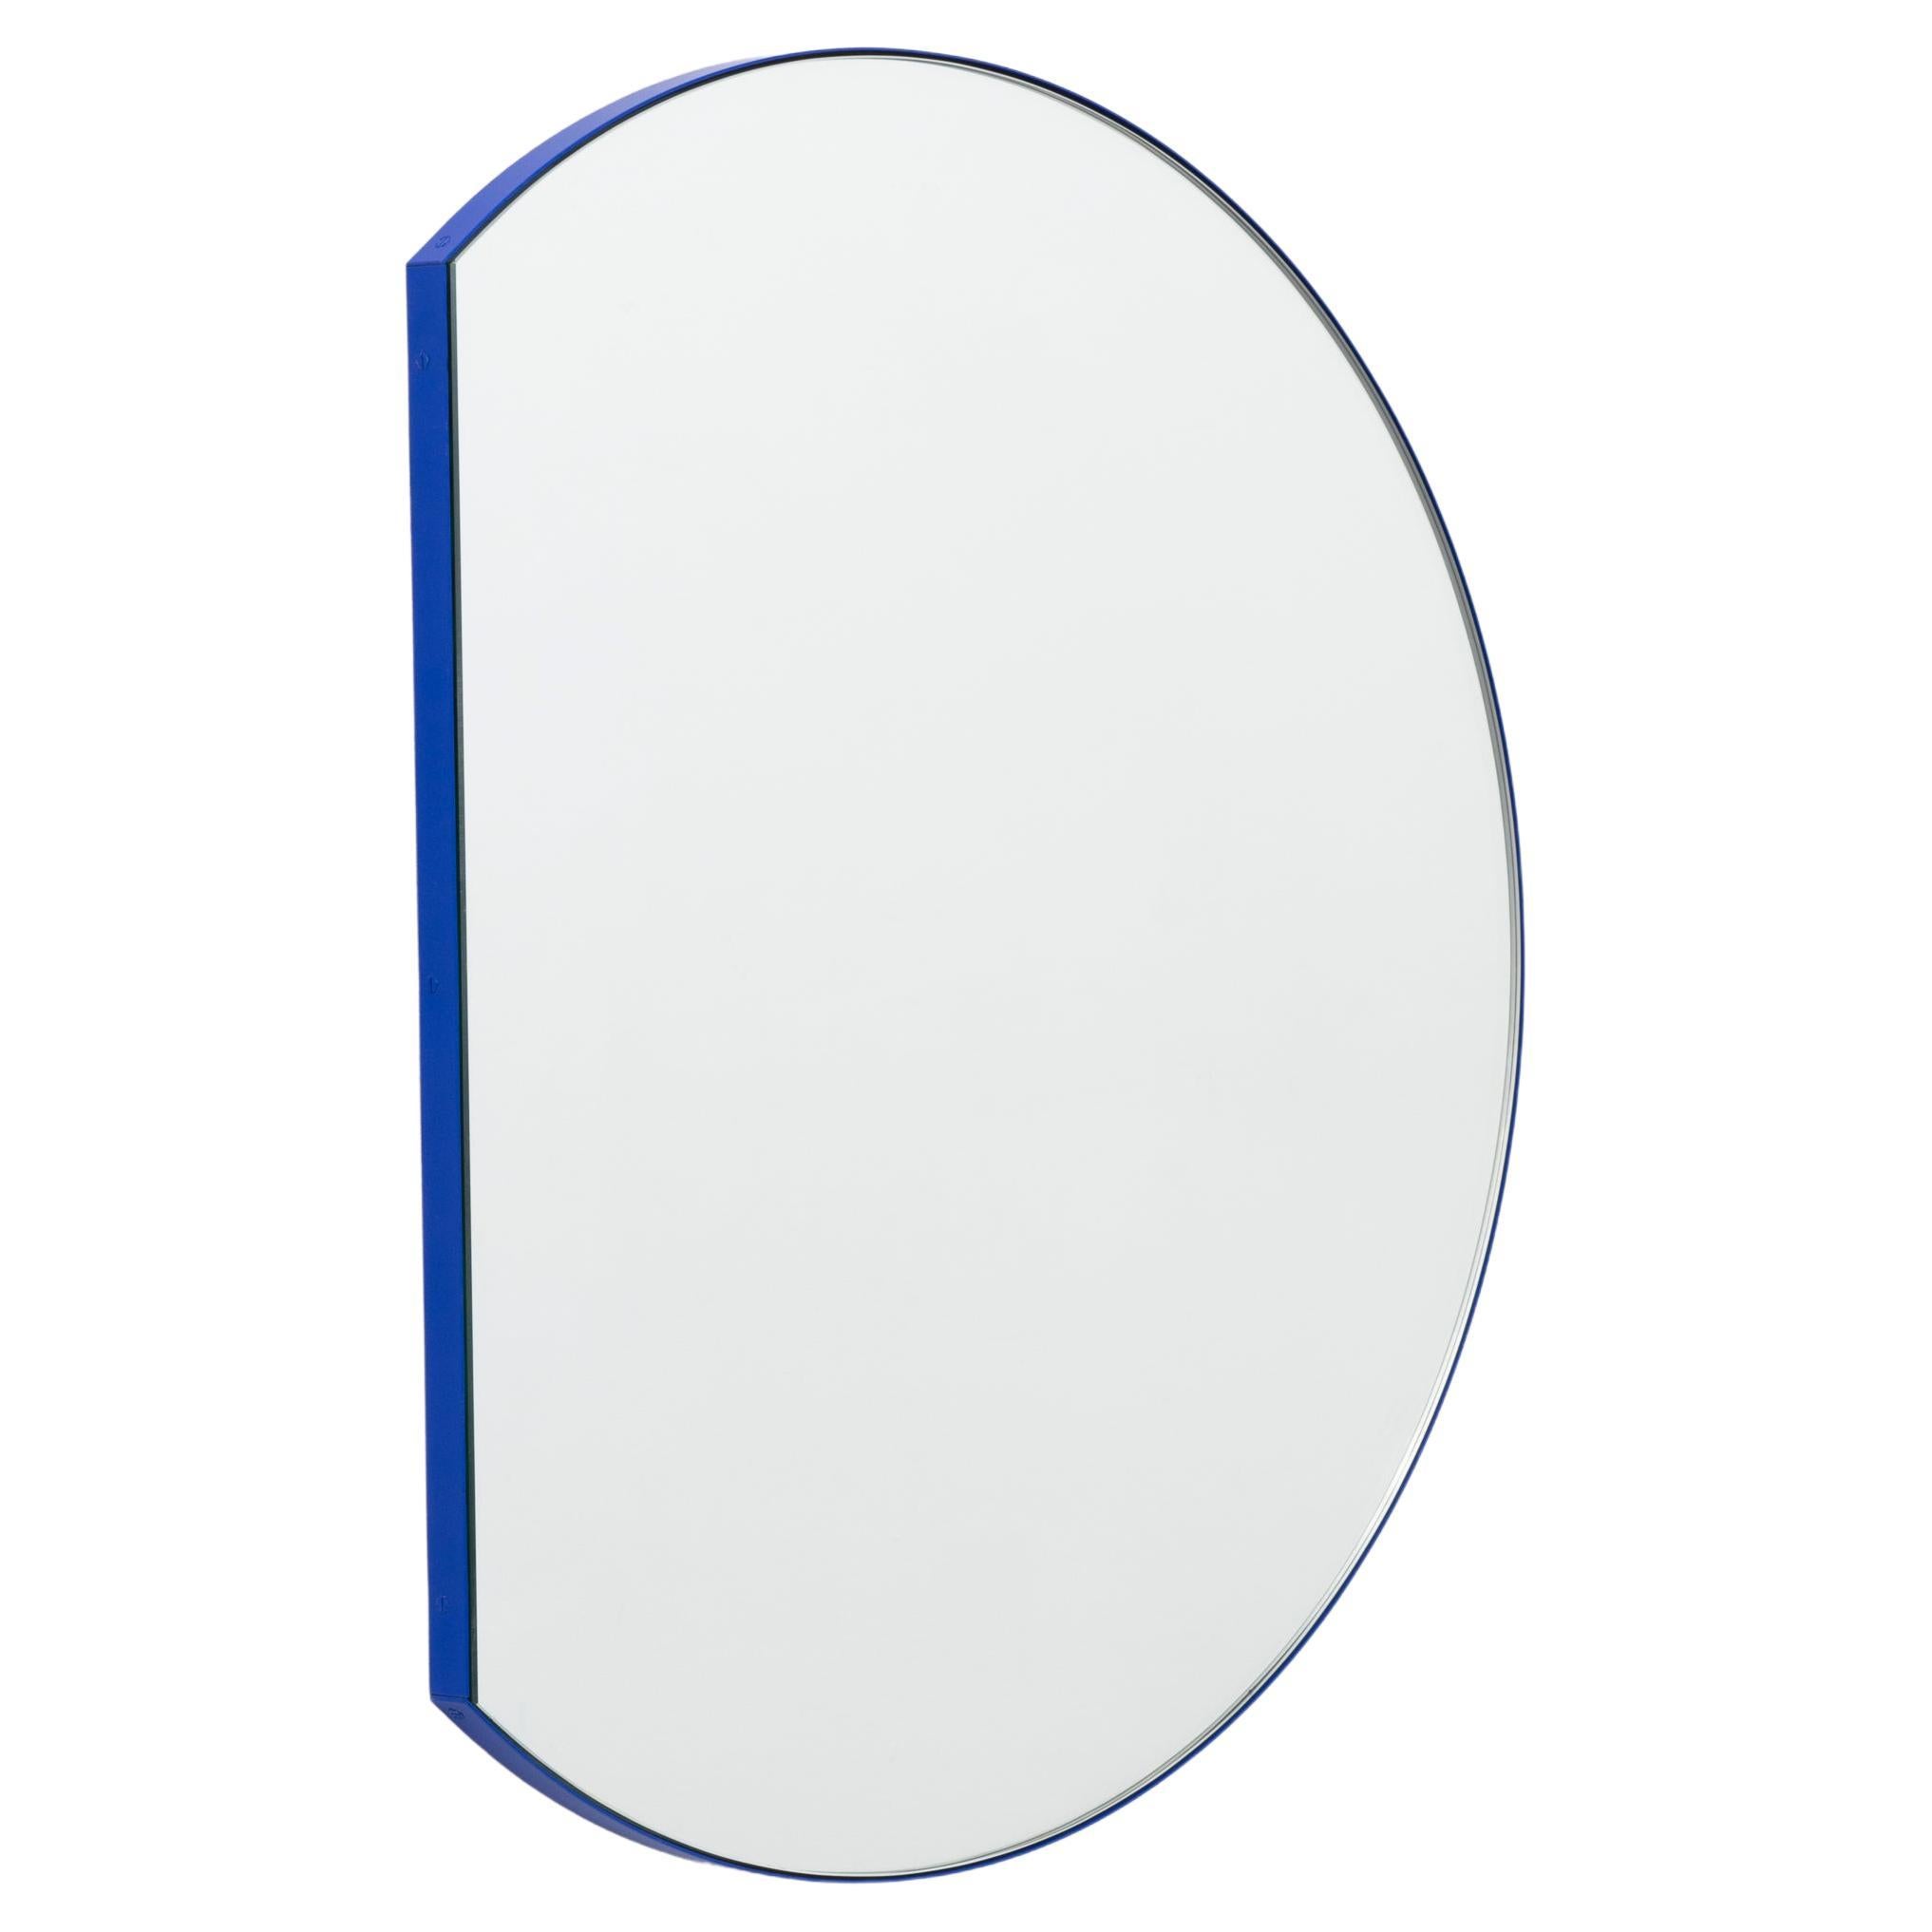 En stock Miroir rond moderne en forme de trèfle Orbis Trecus, cadre bleu, moyen